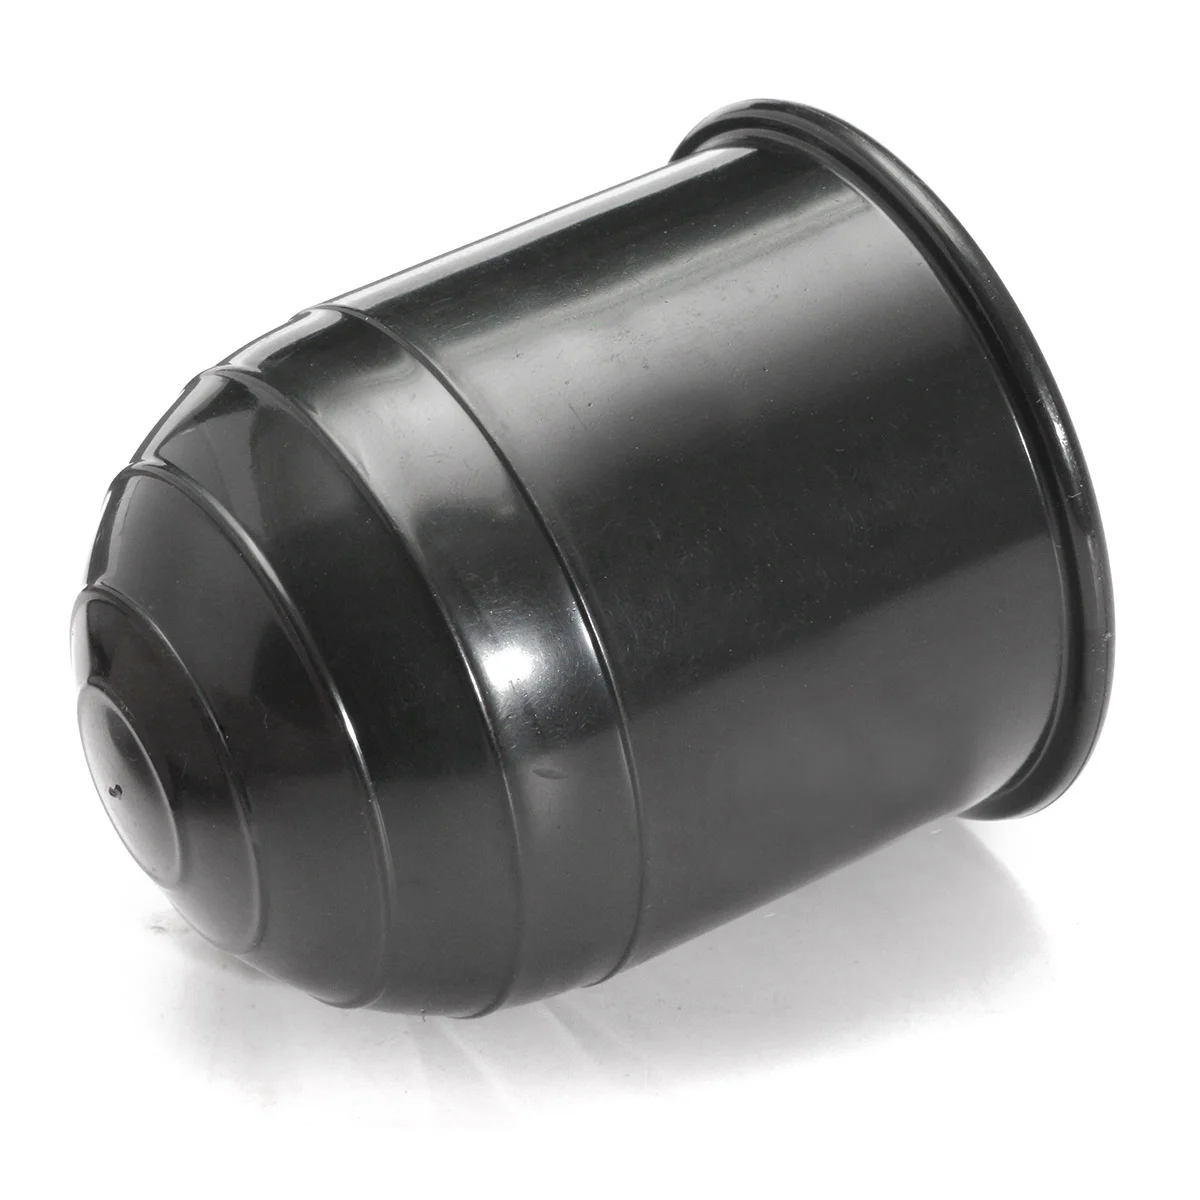 Universal 50mm Trailer Hitch Ball Cover Ball Protection Towball Cap Towball (Black) Towbar